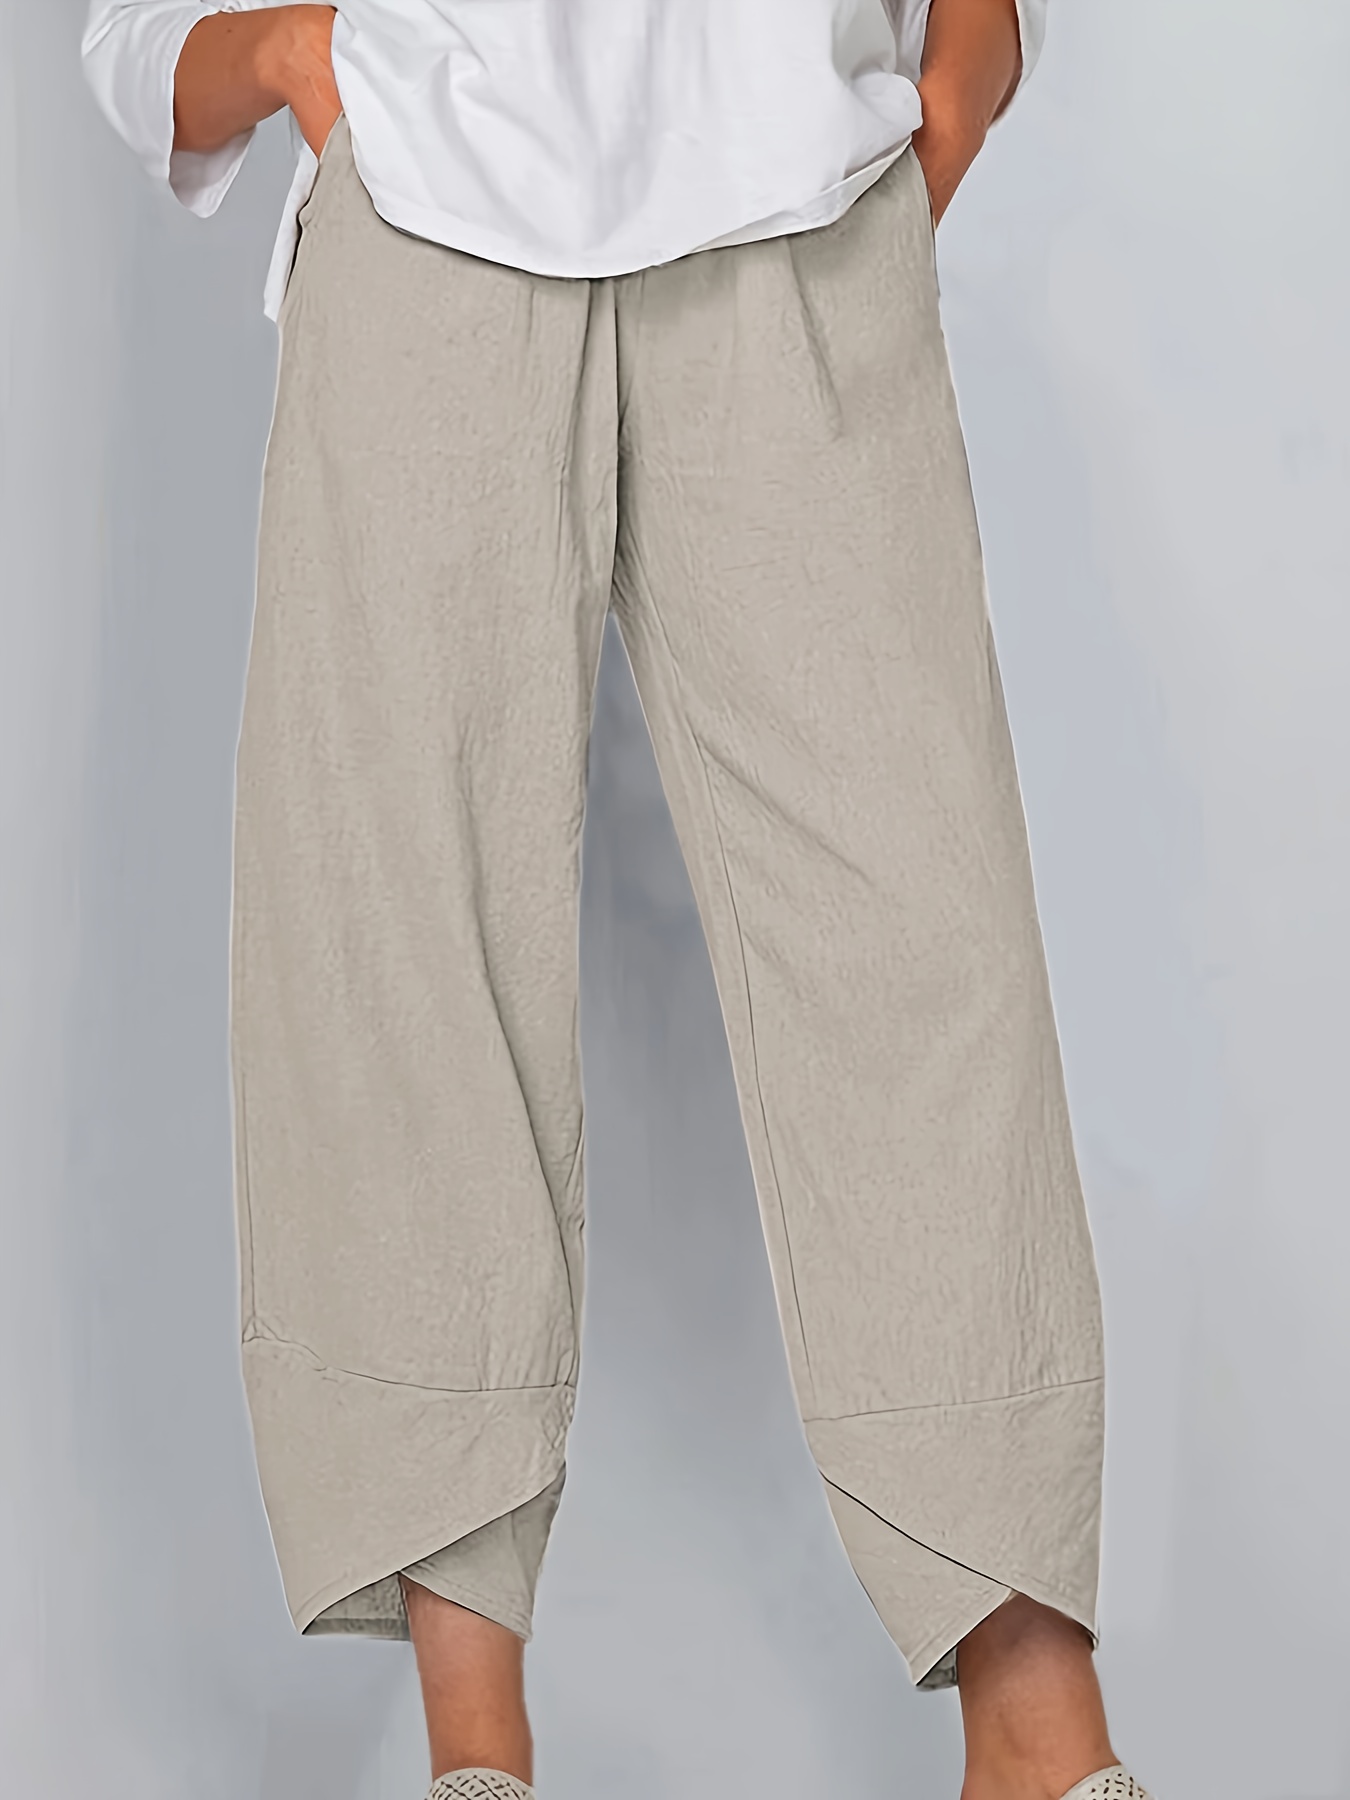 qILAKOG Capri Pants For Women, Fashion Womens Casual Solid Color